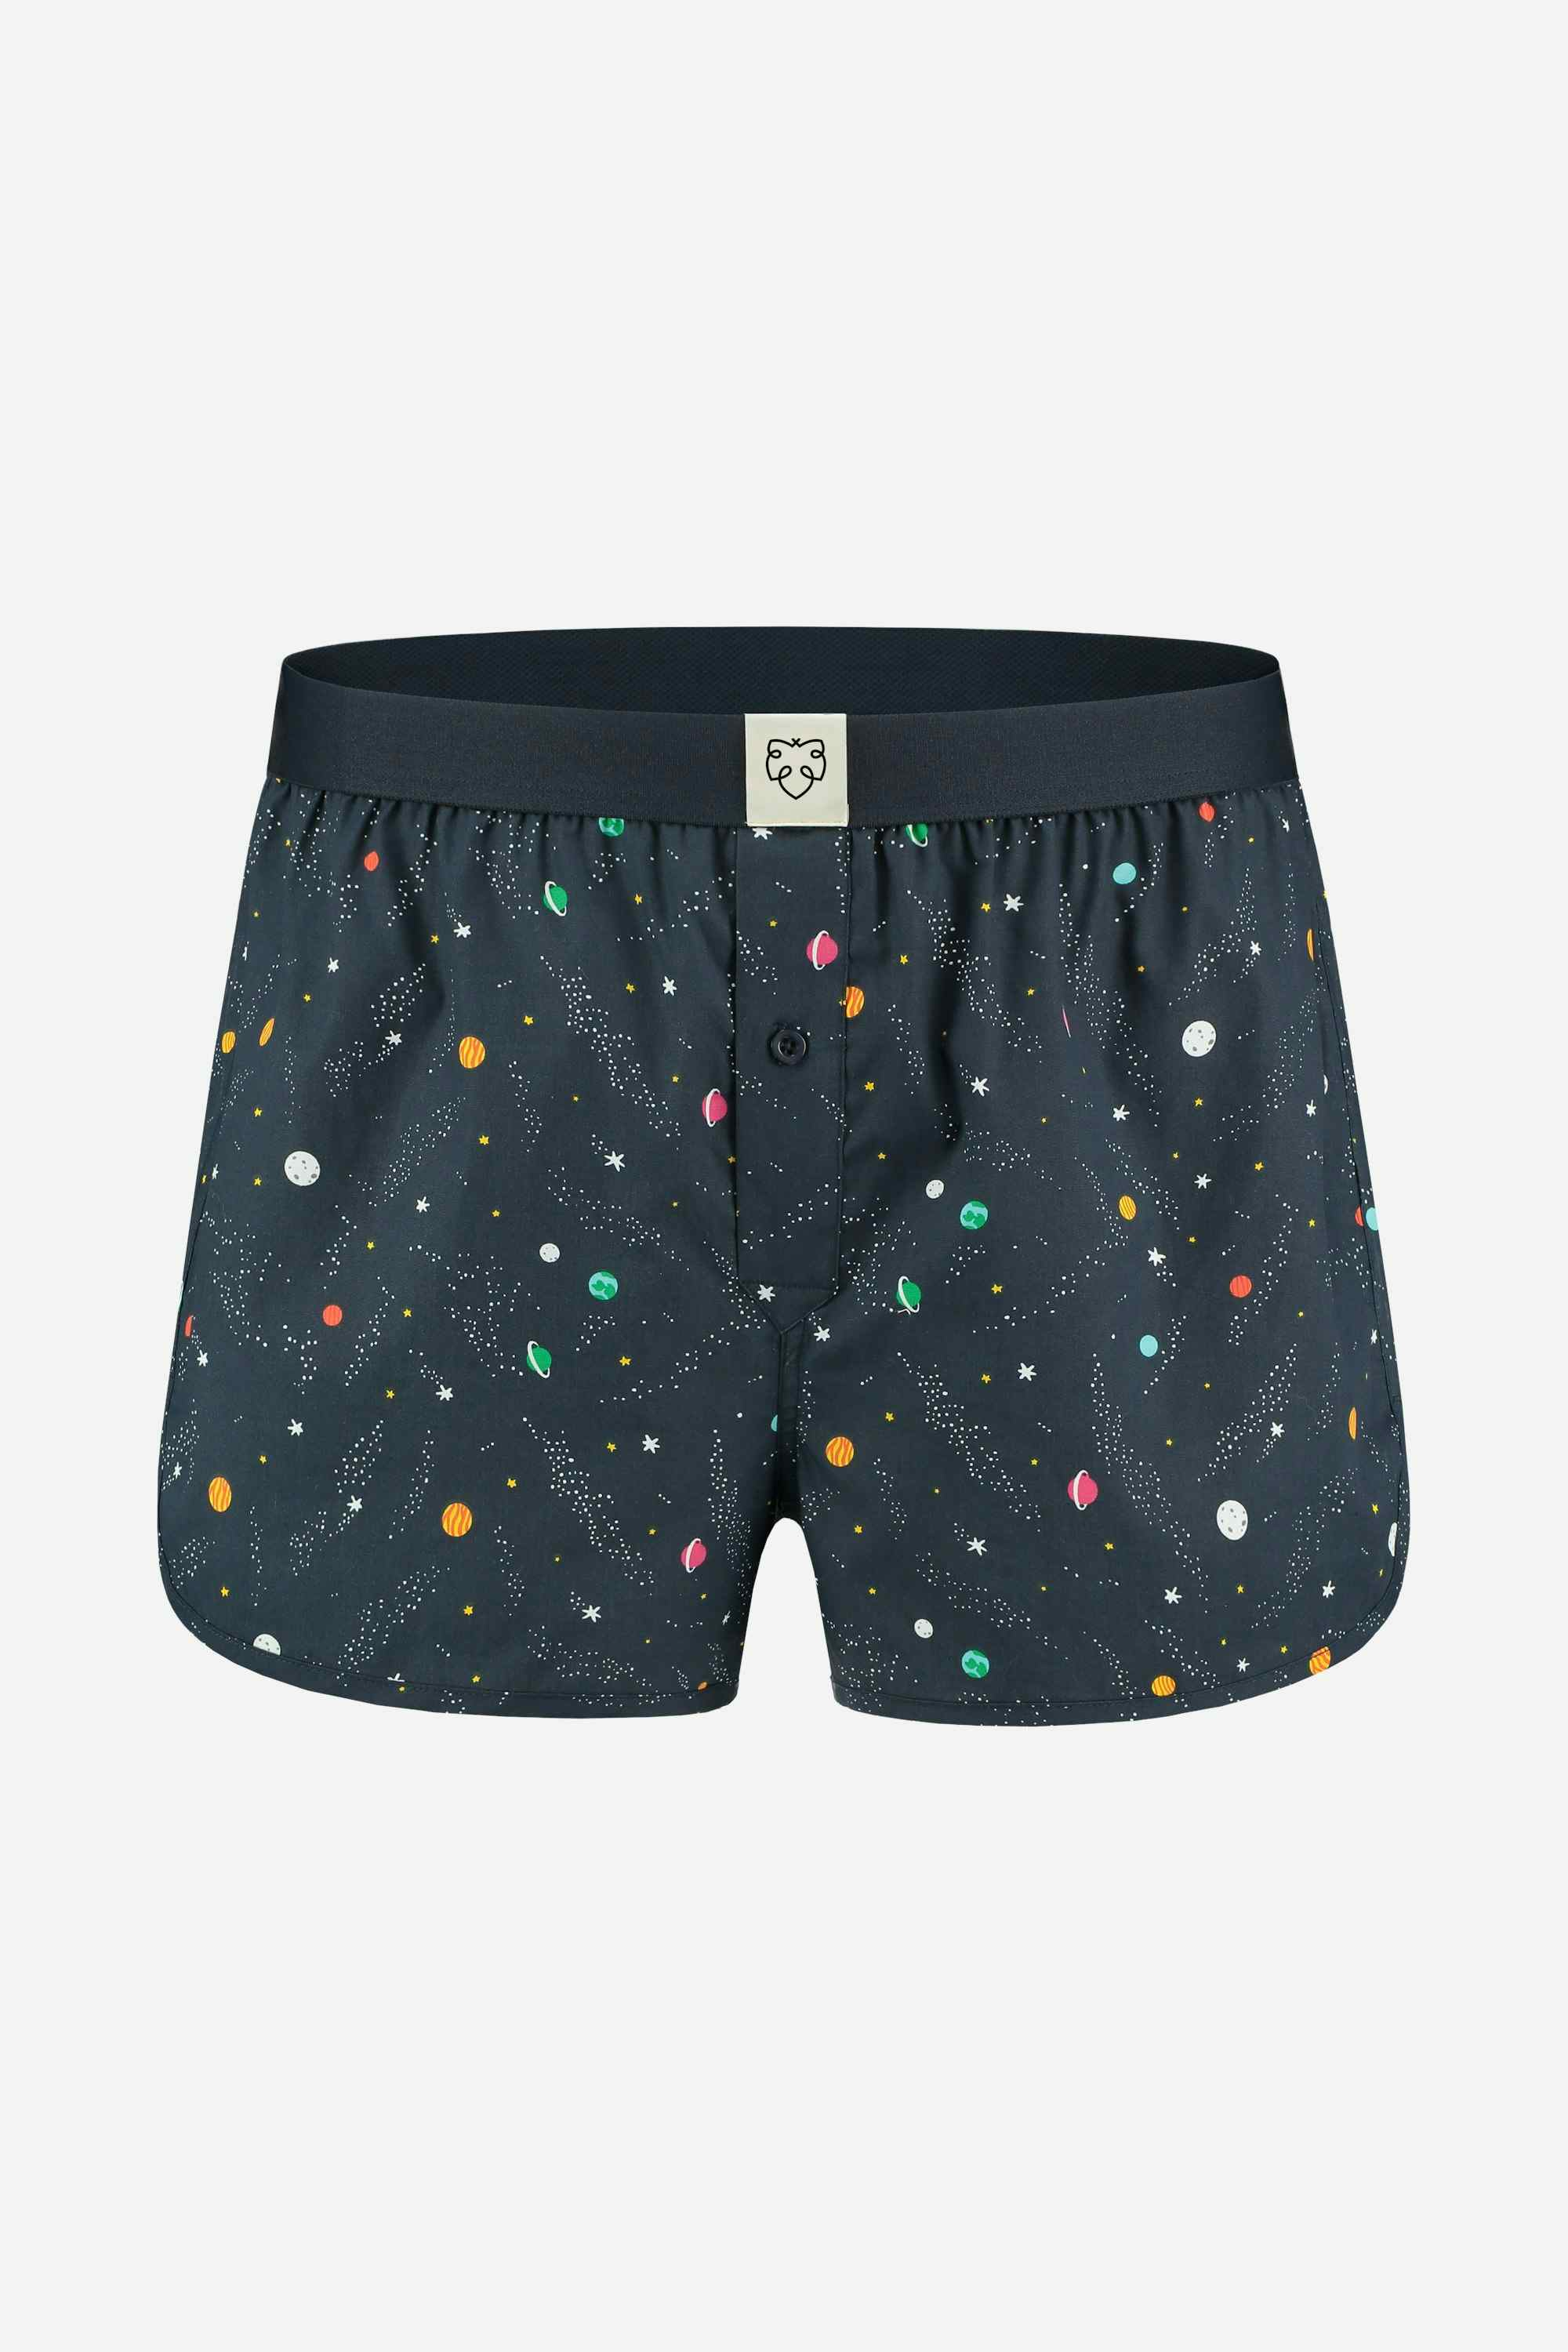 Pinebox shorts